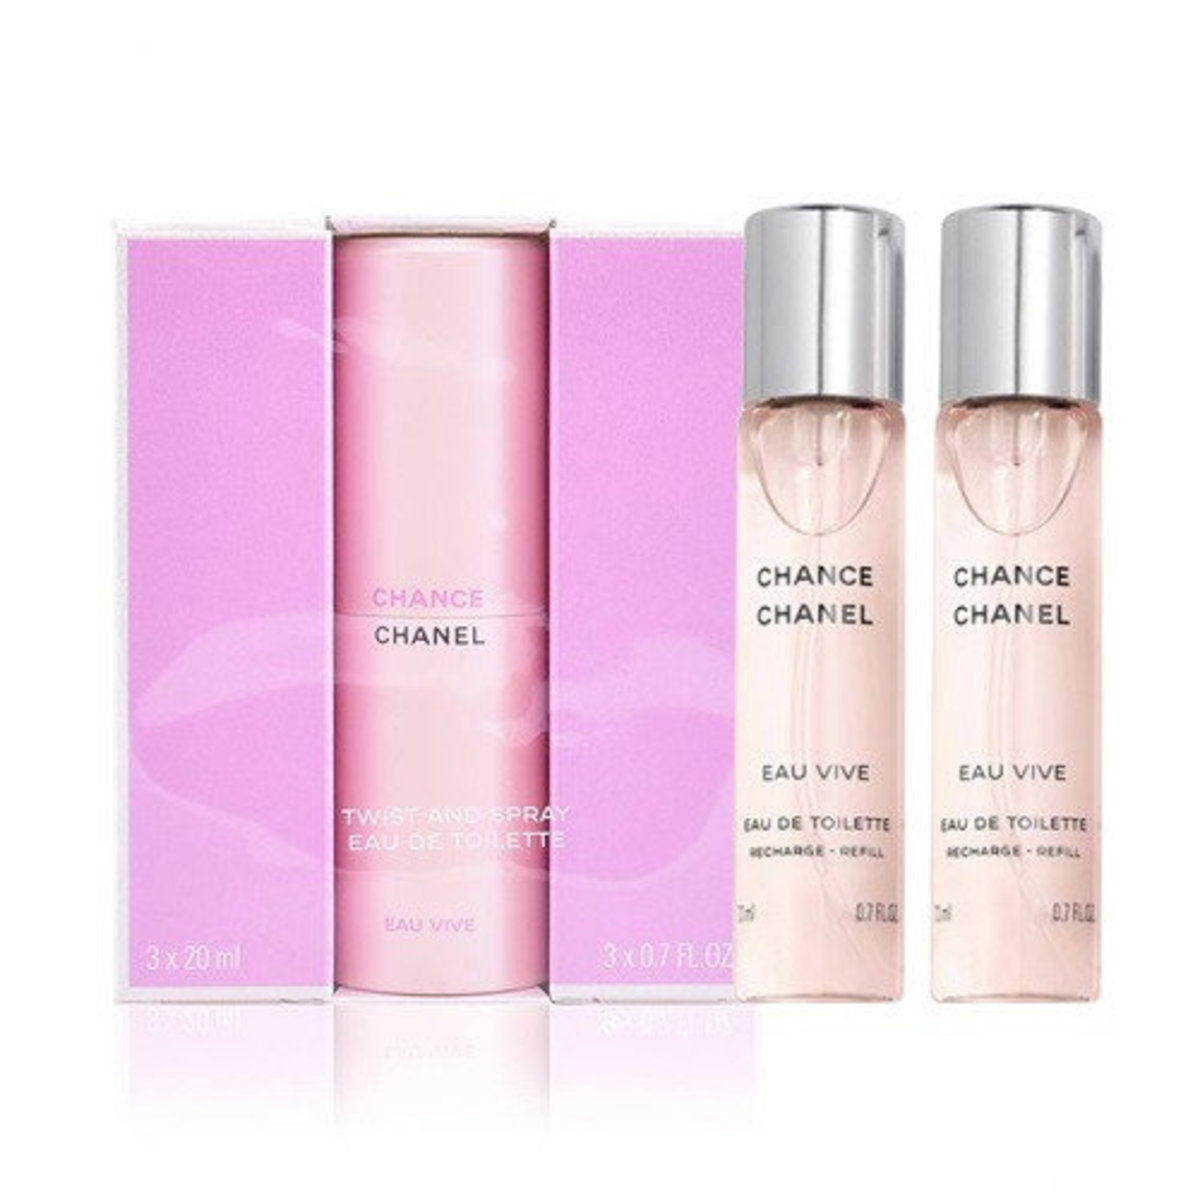 Chanel Chance Eau Vive EDT 3 x 20mL Travel Spray - Perfumes